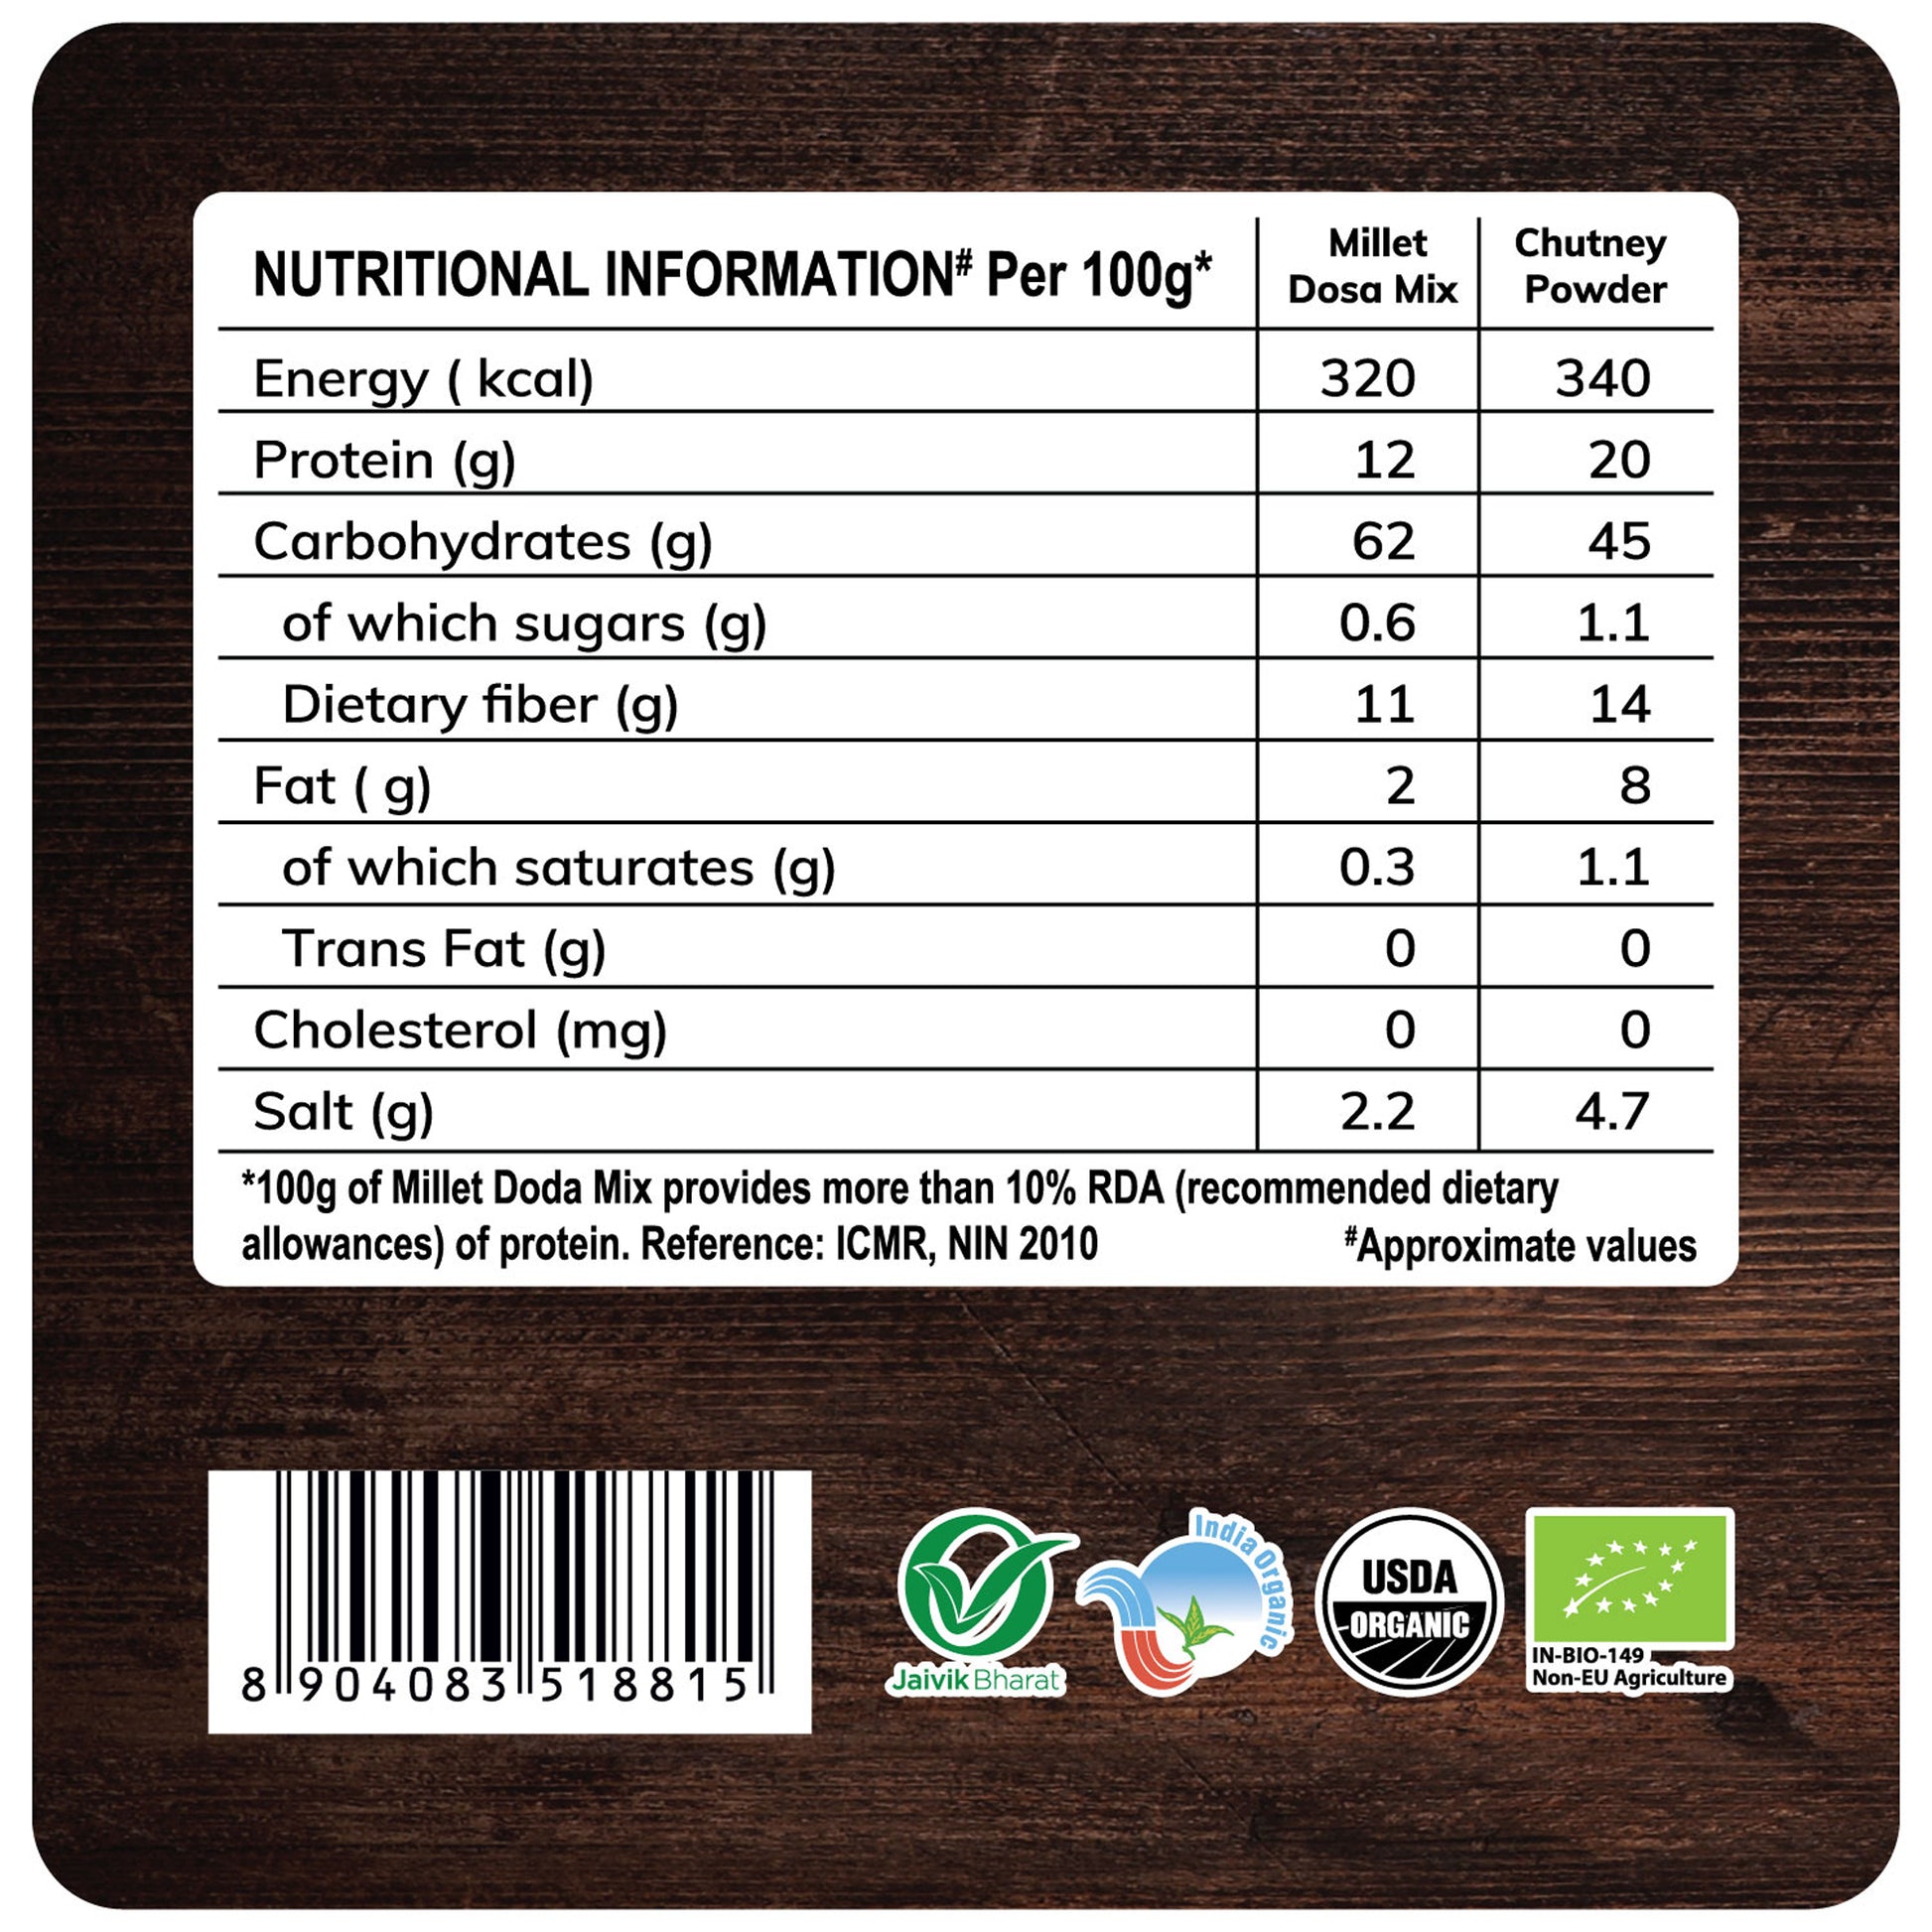 nutrition detailing- Millet Dosa Mix 216 G